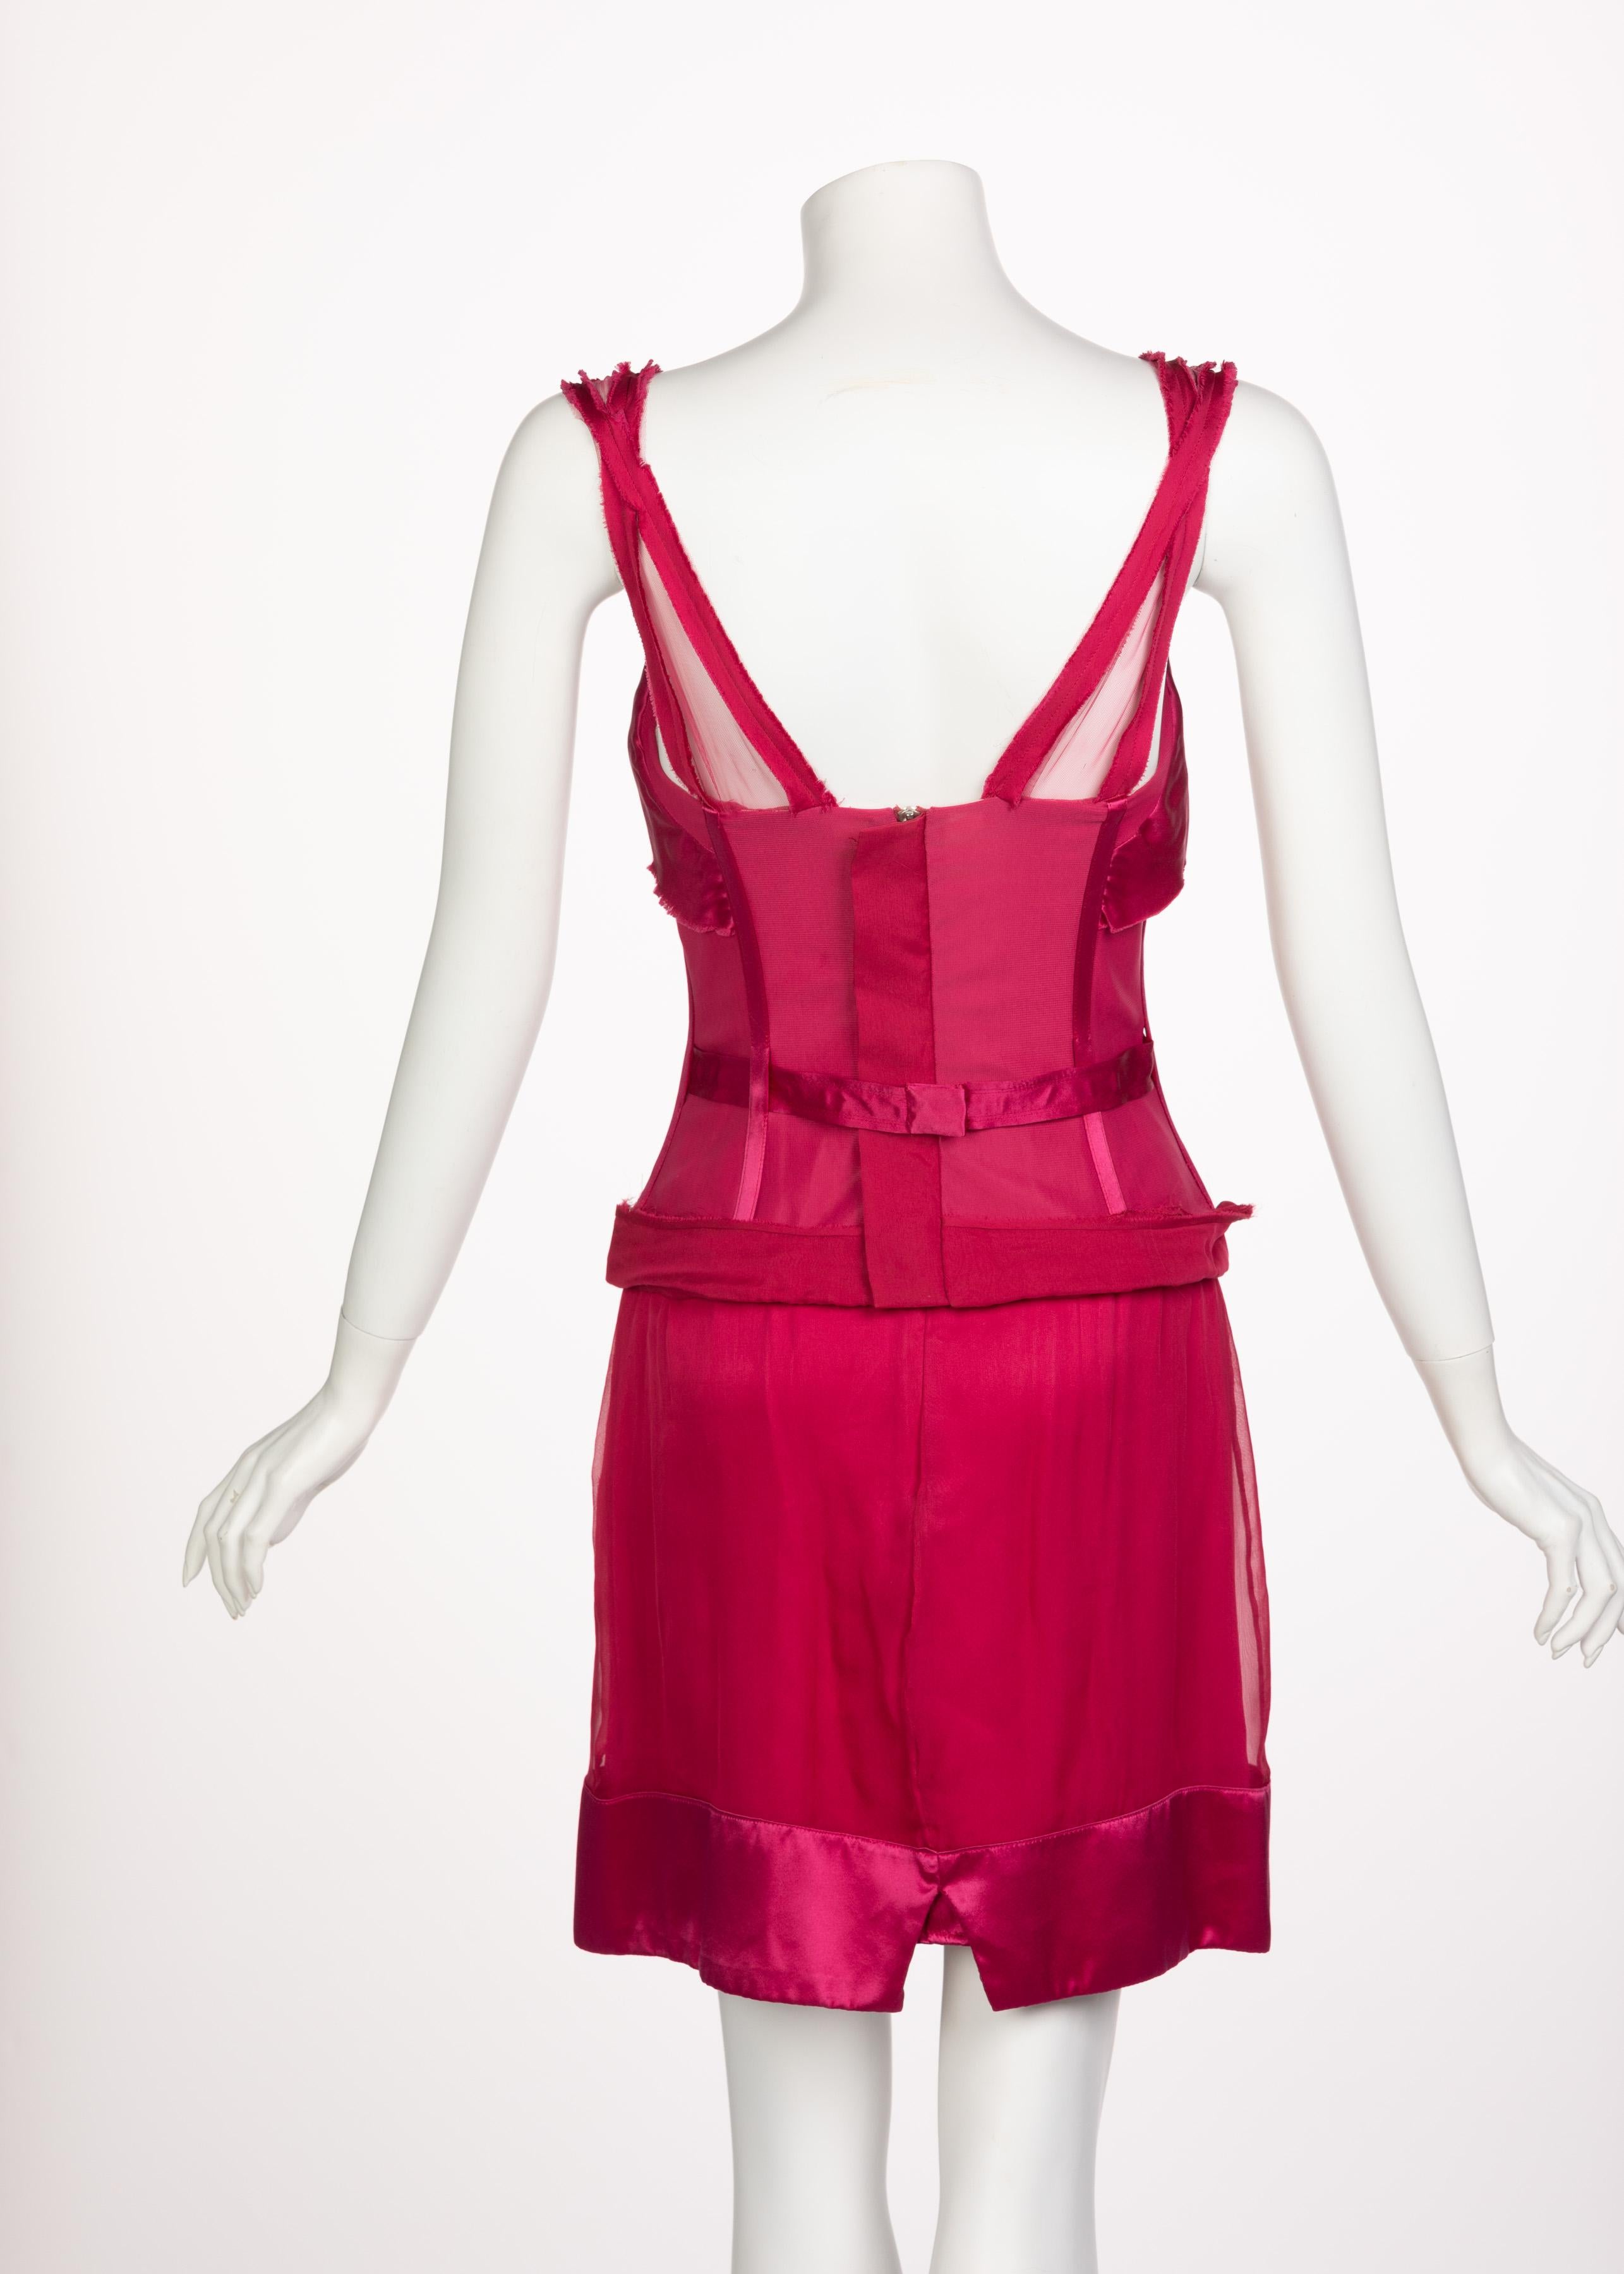 Stella McCartney Magenta Pink Corset Dress Runway 2003 In Excellent Condition In Boca Raton, FL